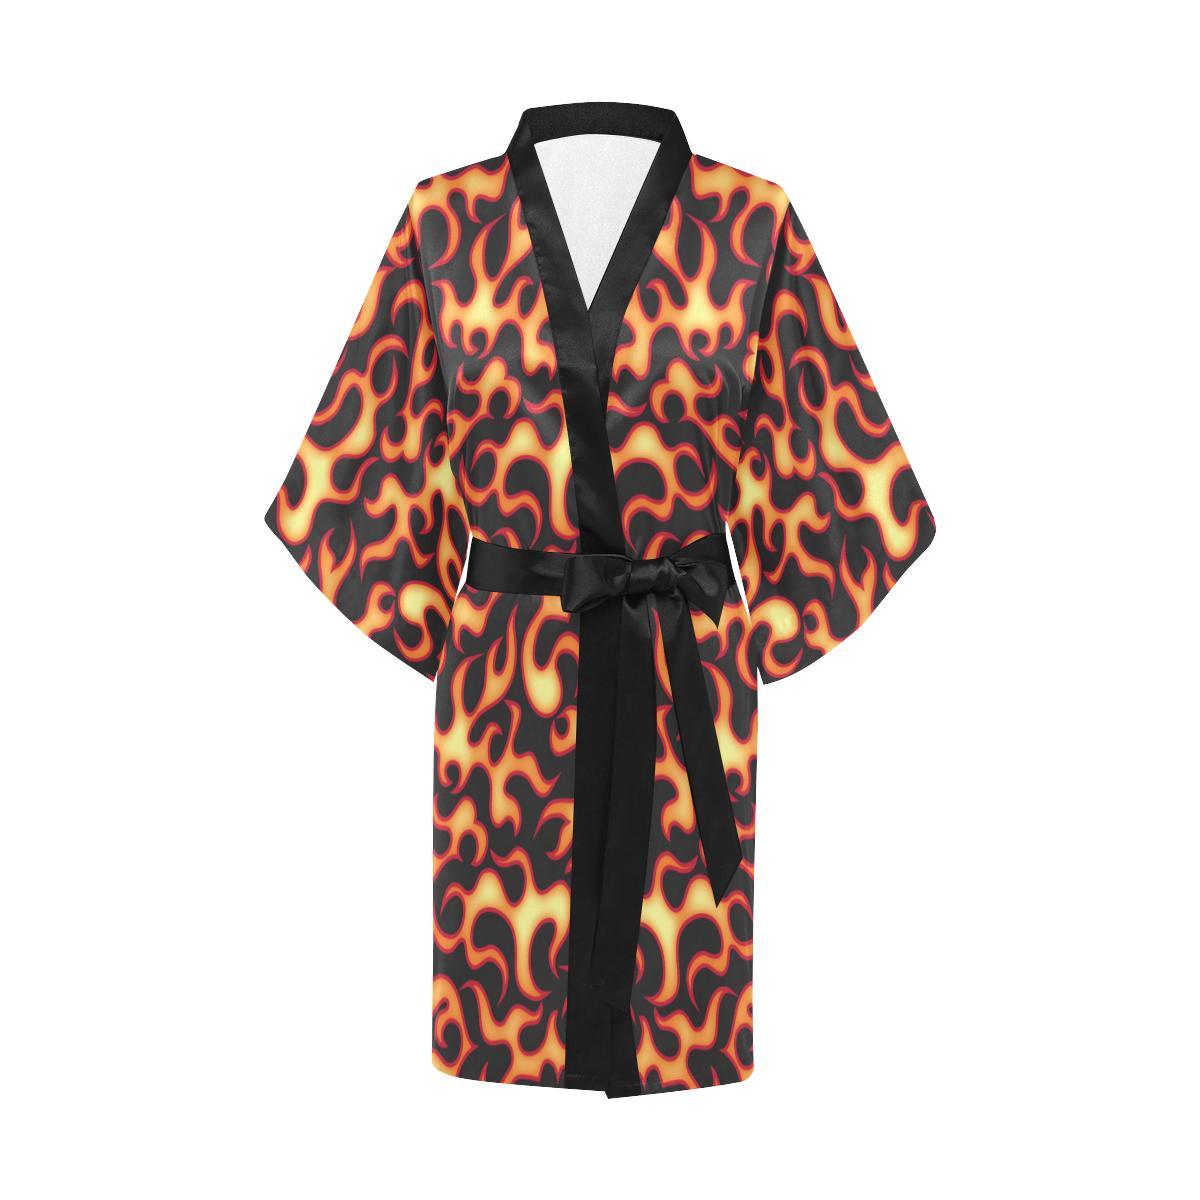 Flame Fire Themed Print Women Short Kimono Robe